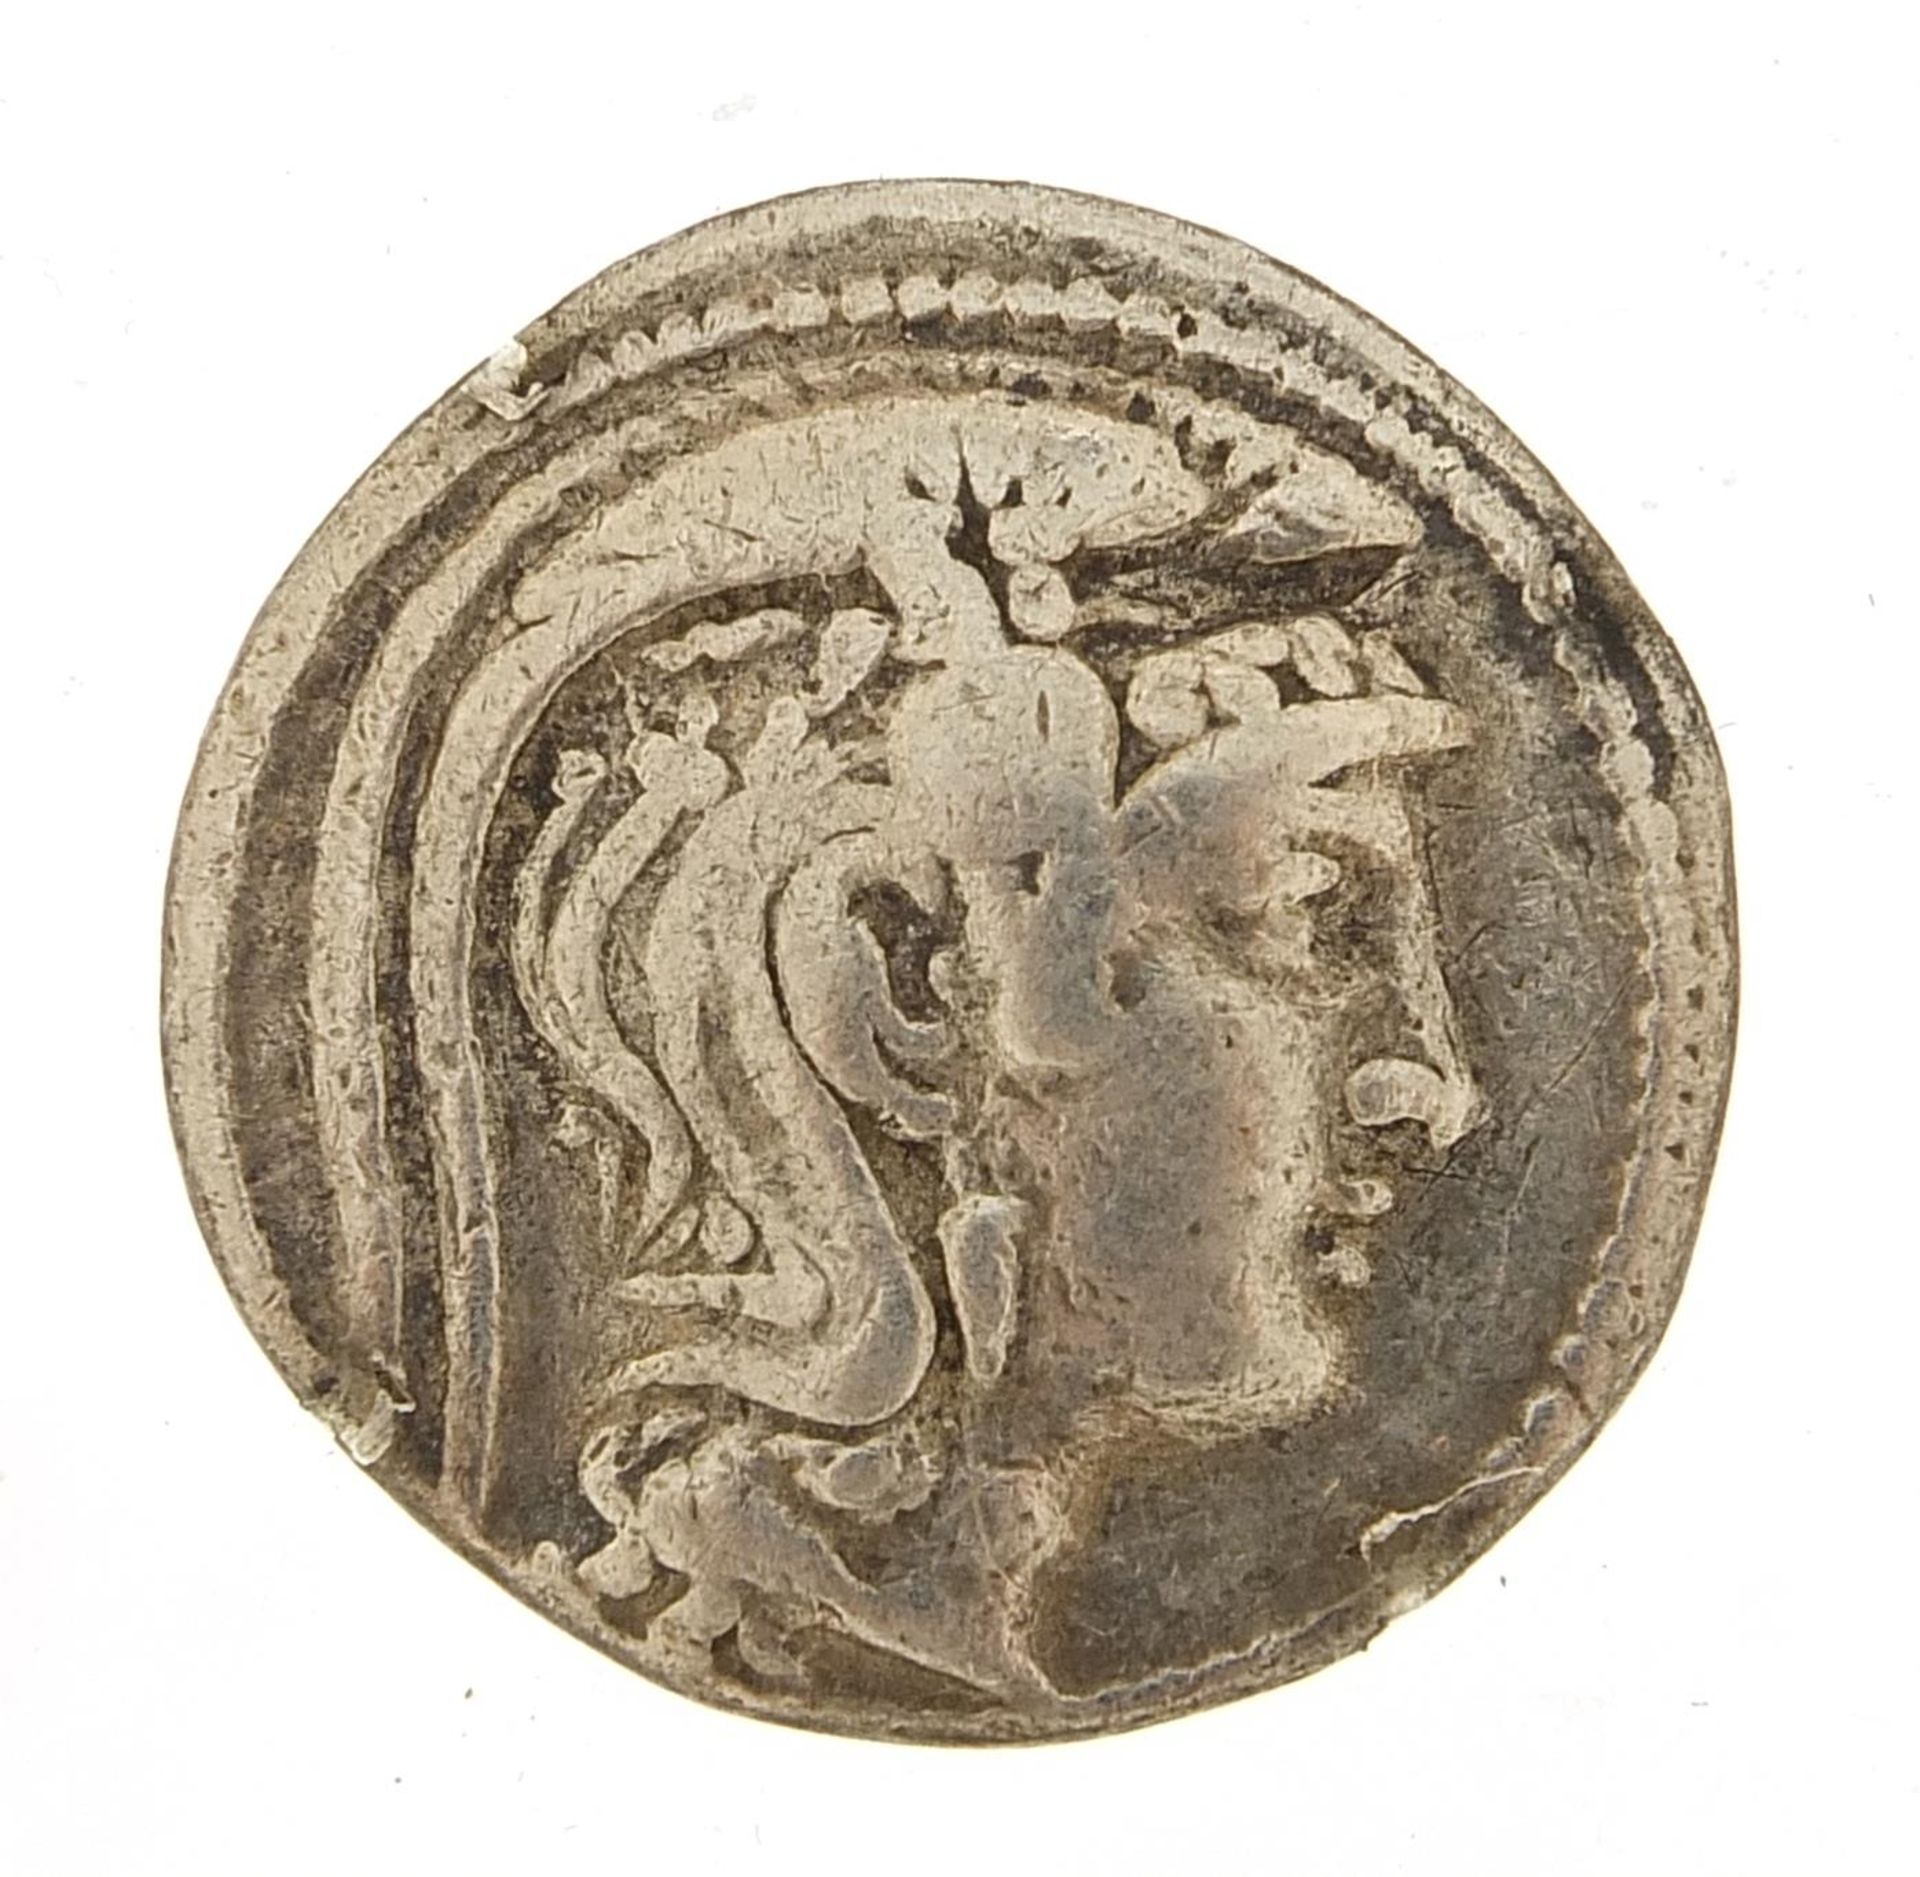 Antique Greek silver Tetradrachm coin, 29mm in diameter, 16.7g